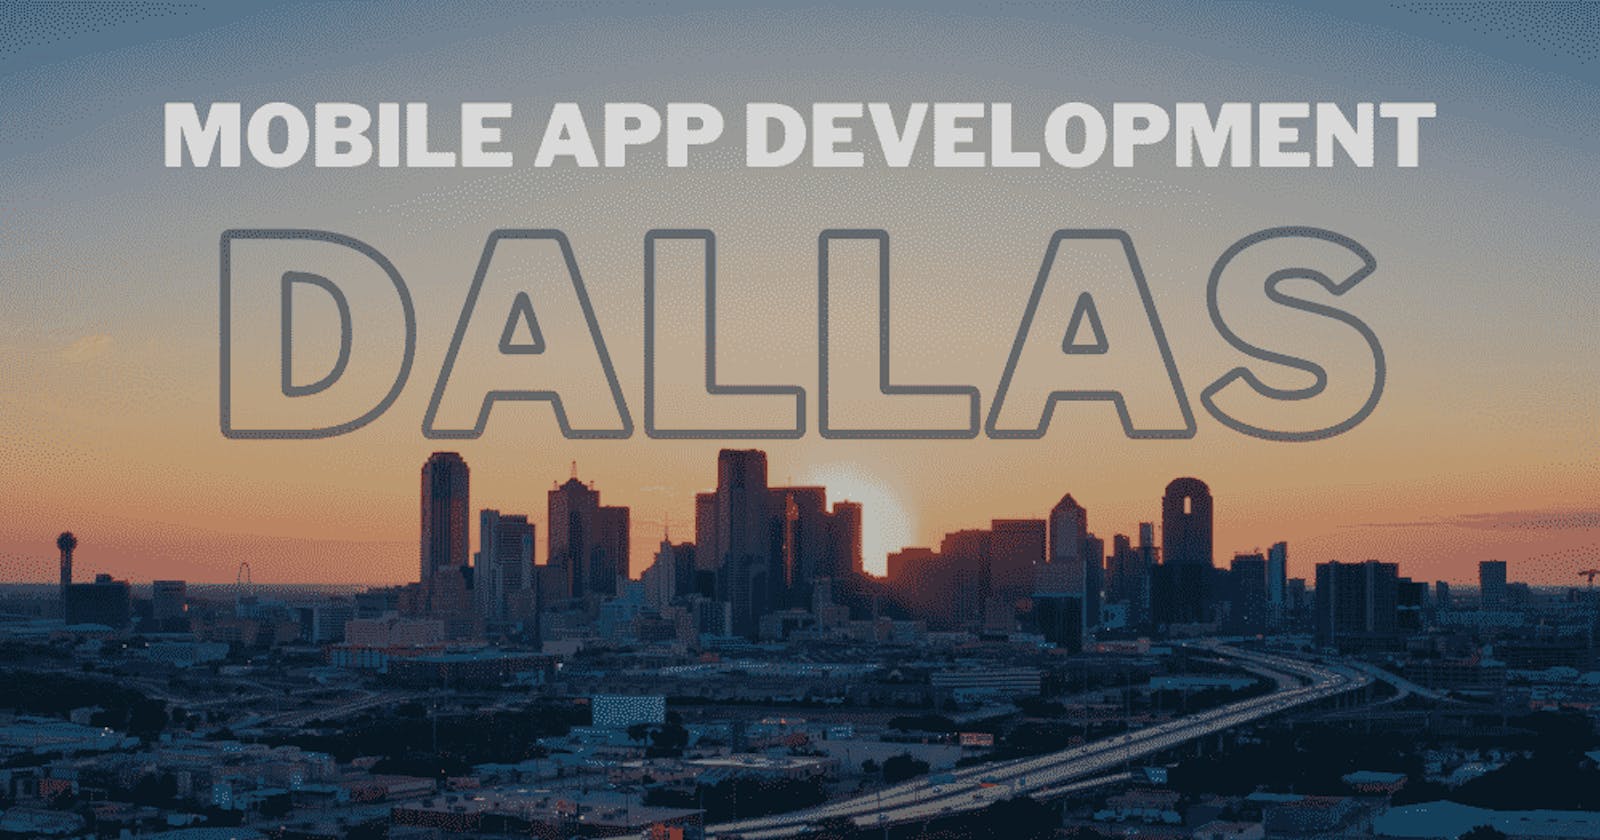 In Search of Mobile App Developers in Dallas?